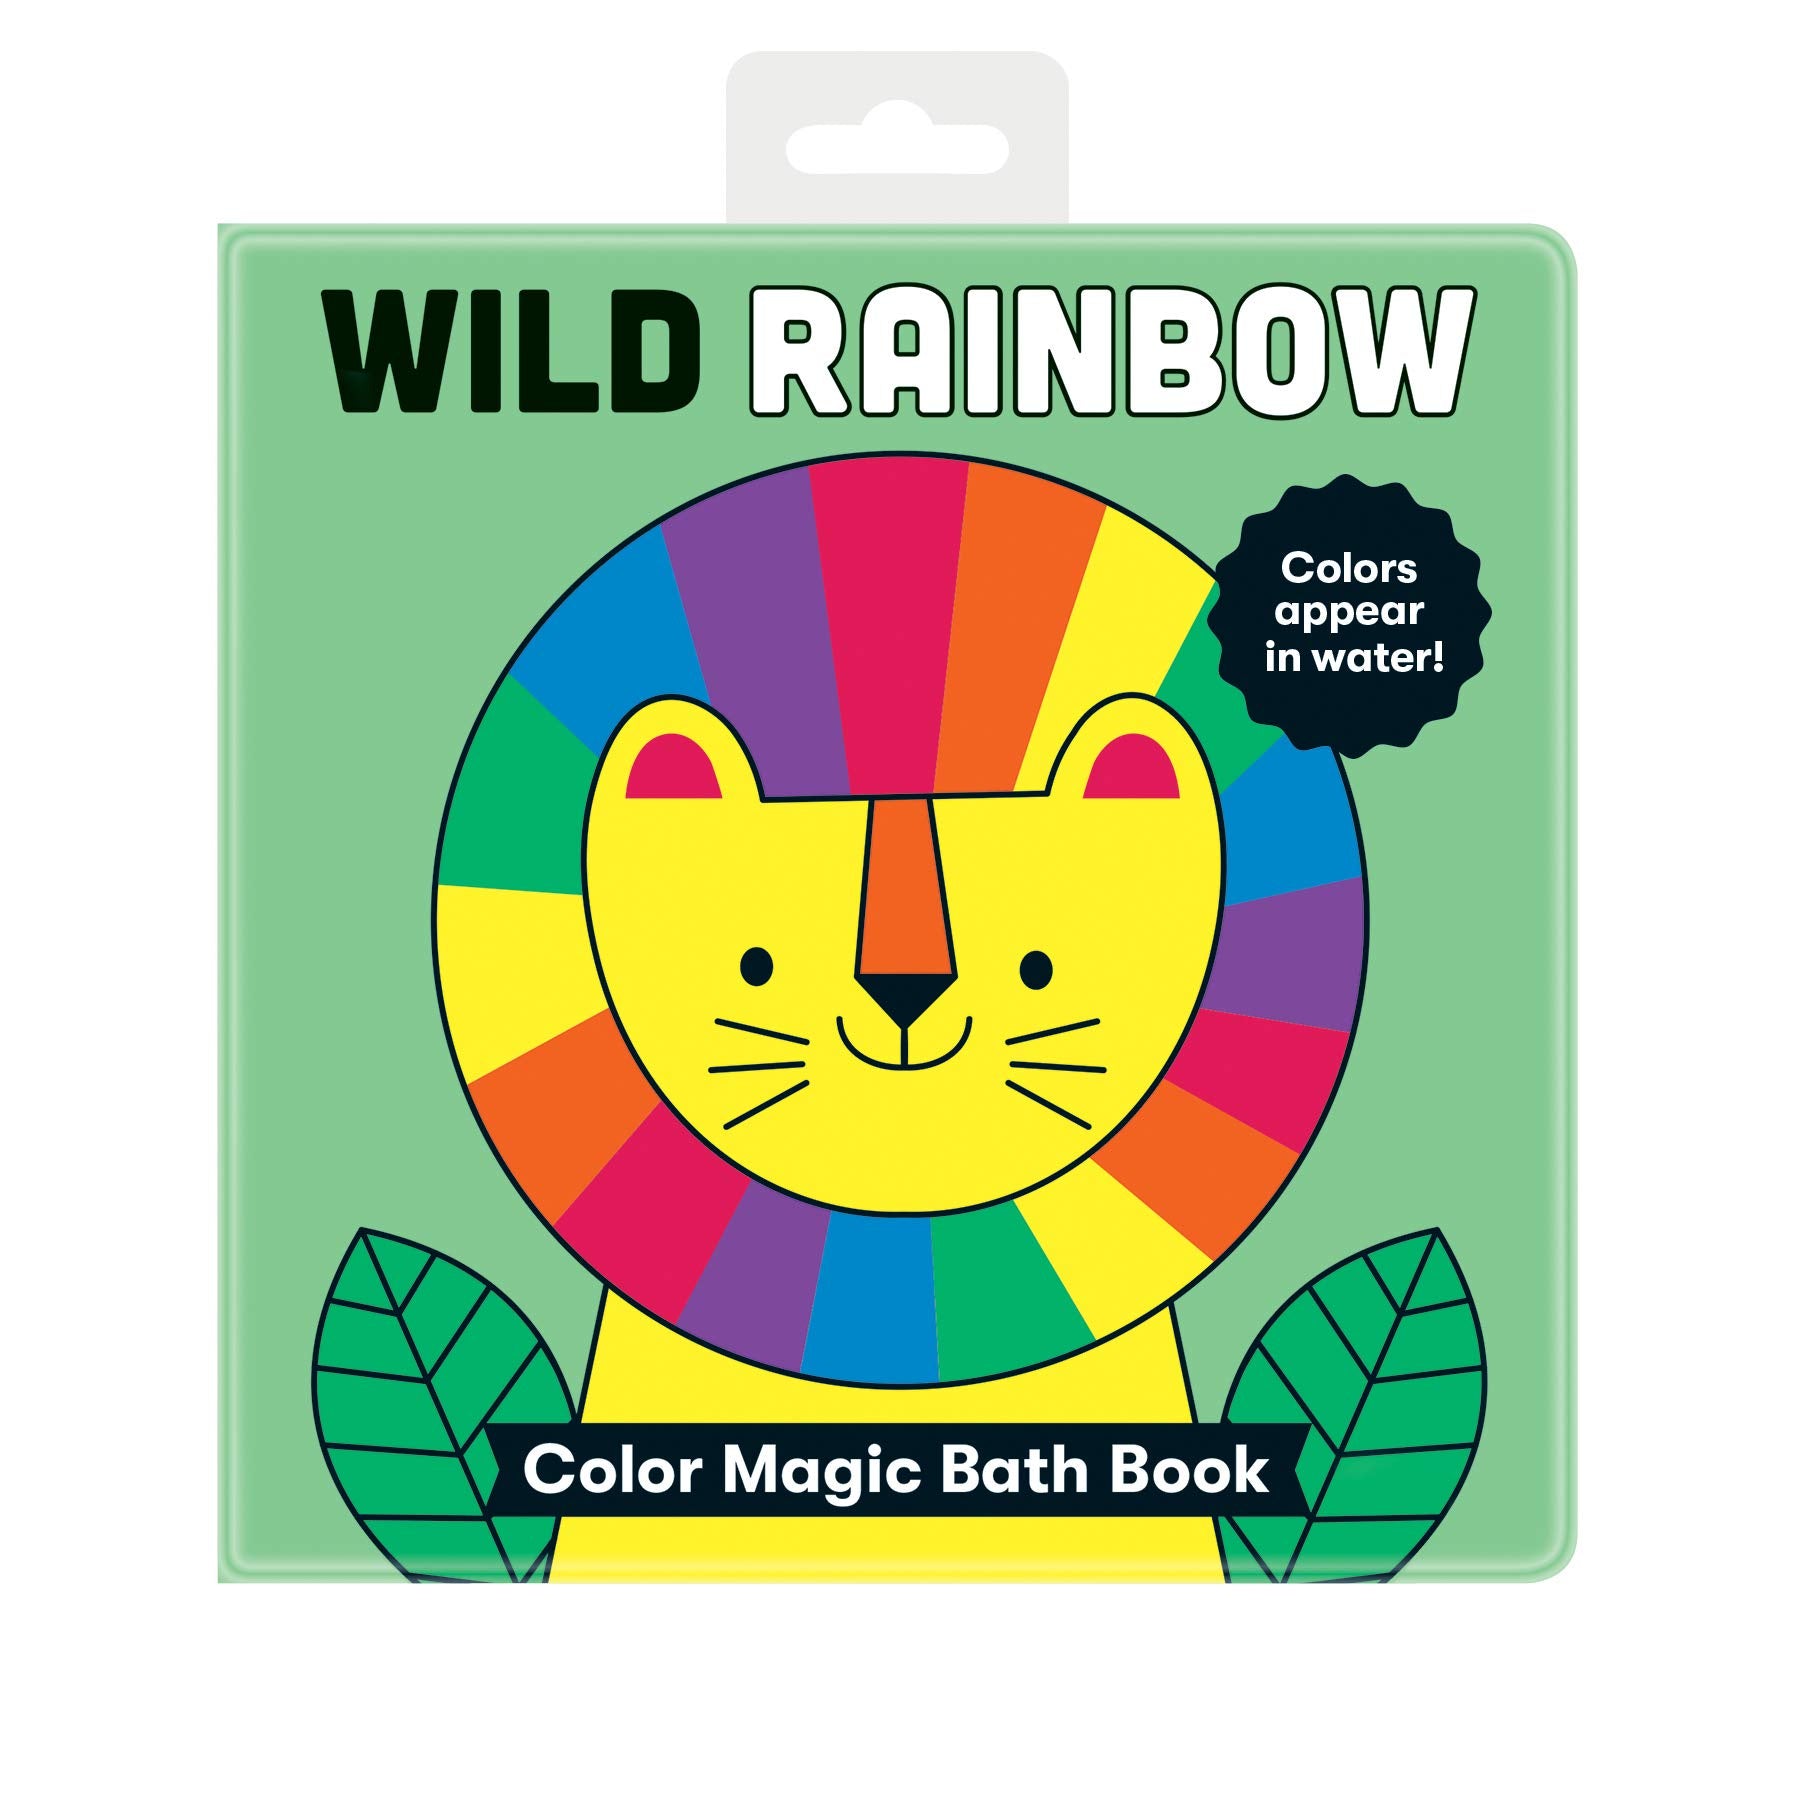 Color Magic Bath Book: Wild Rainbow